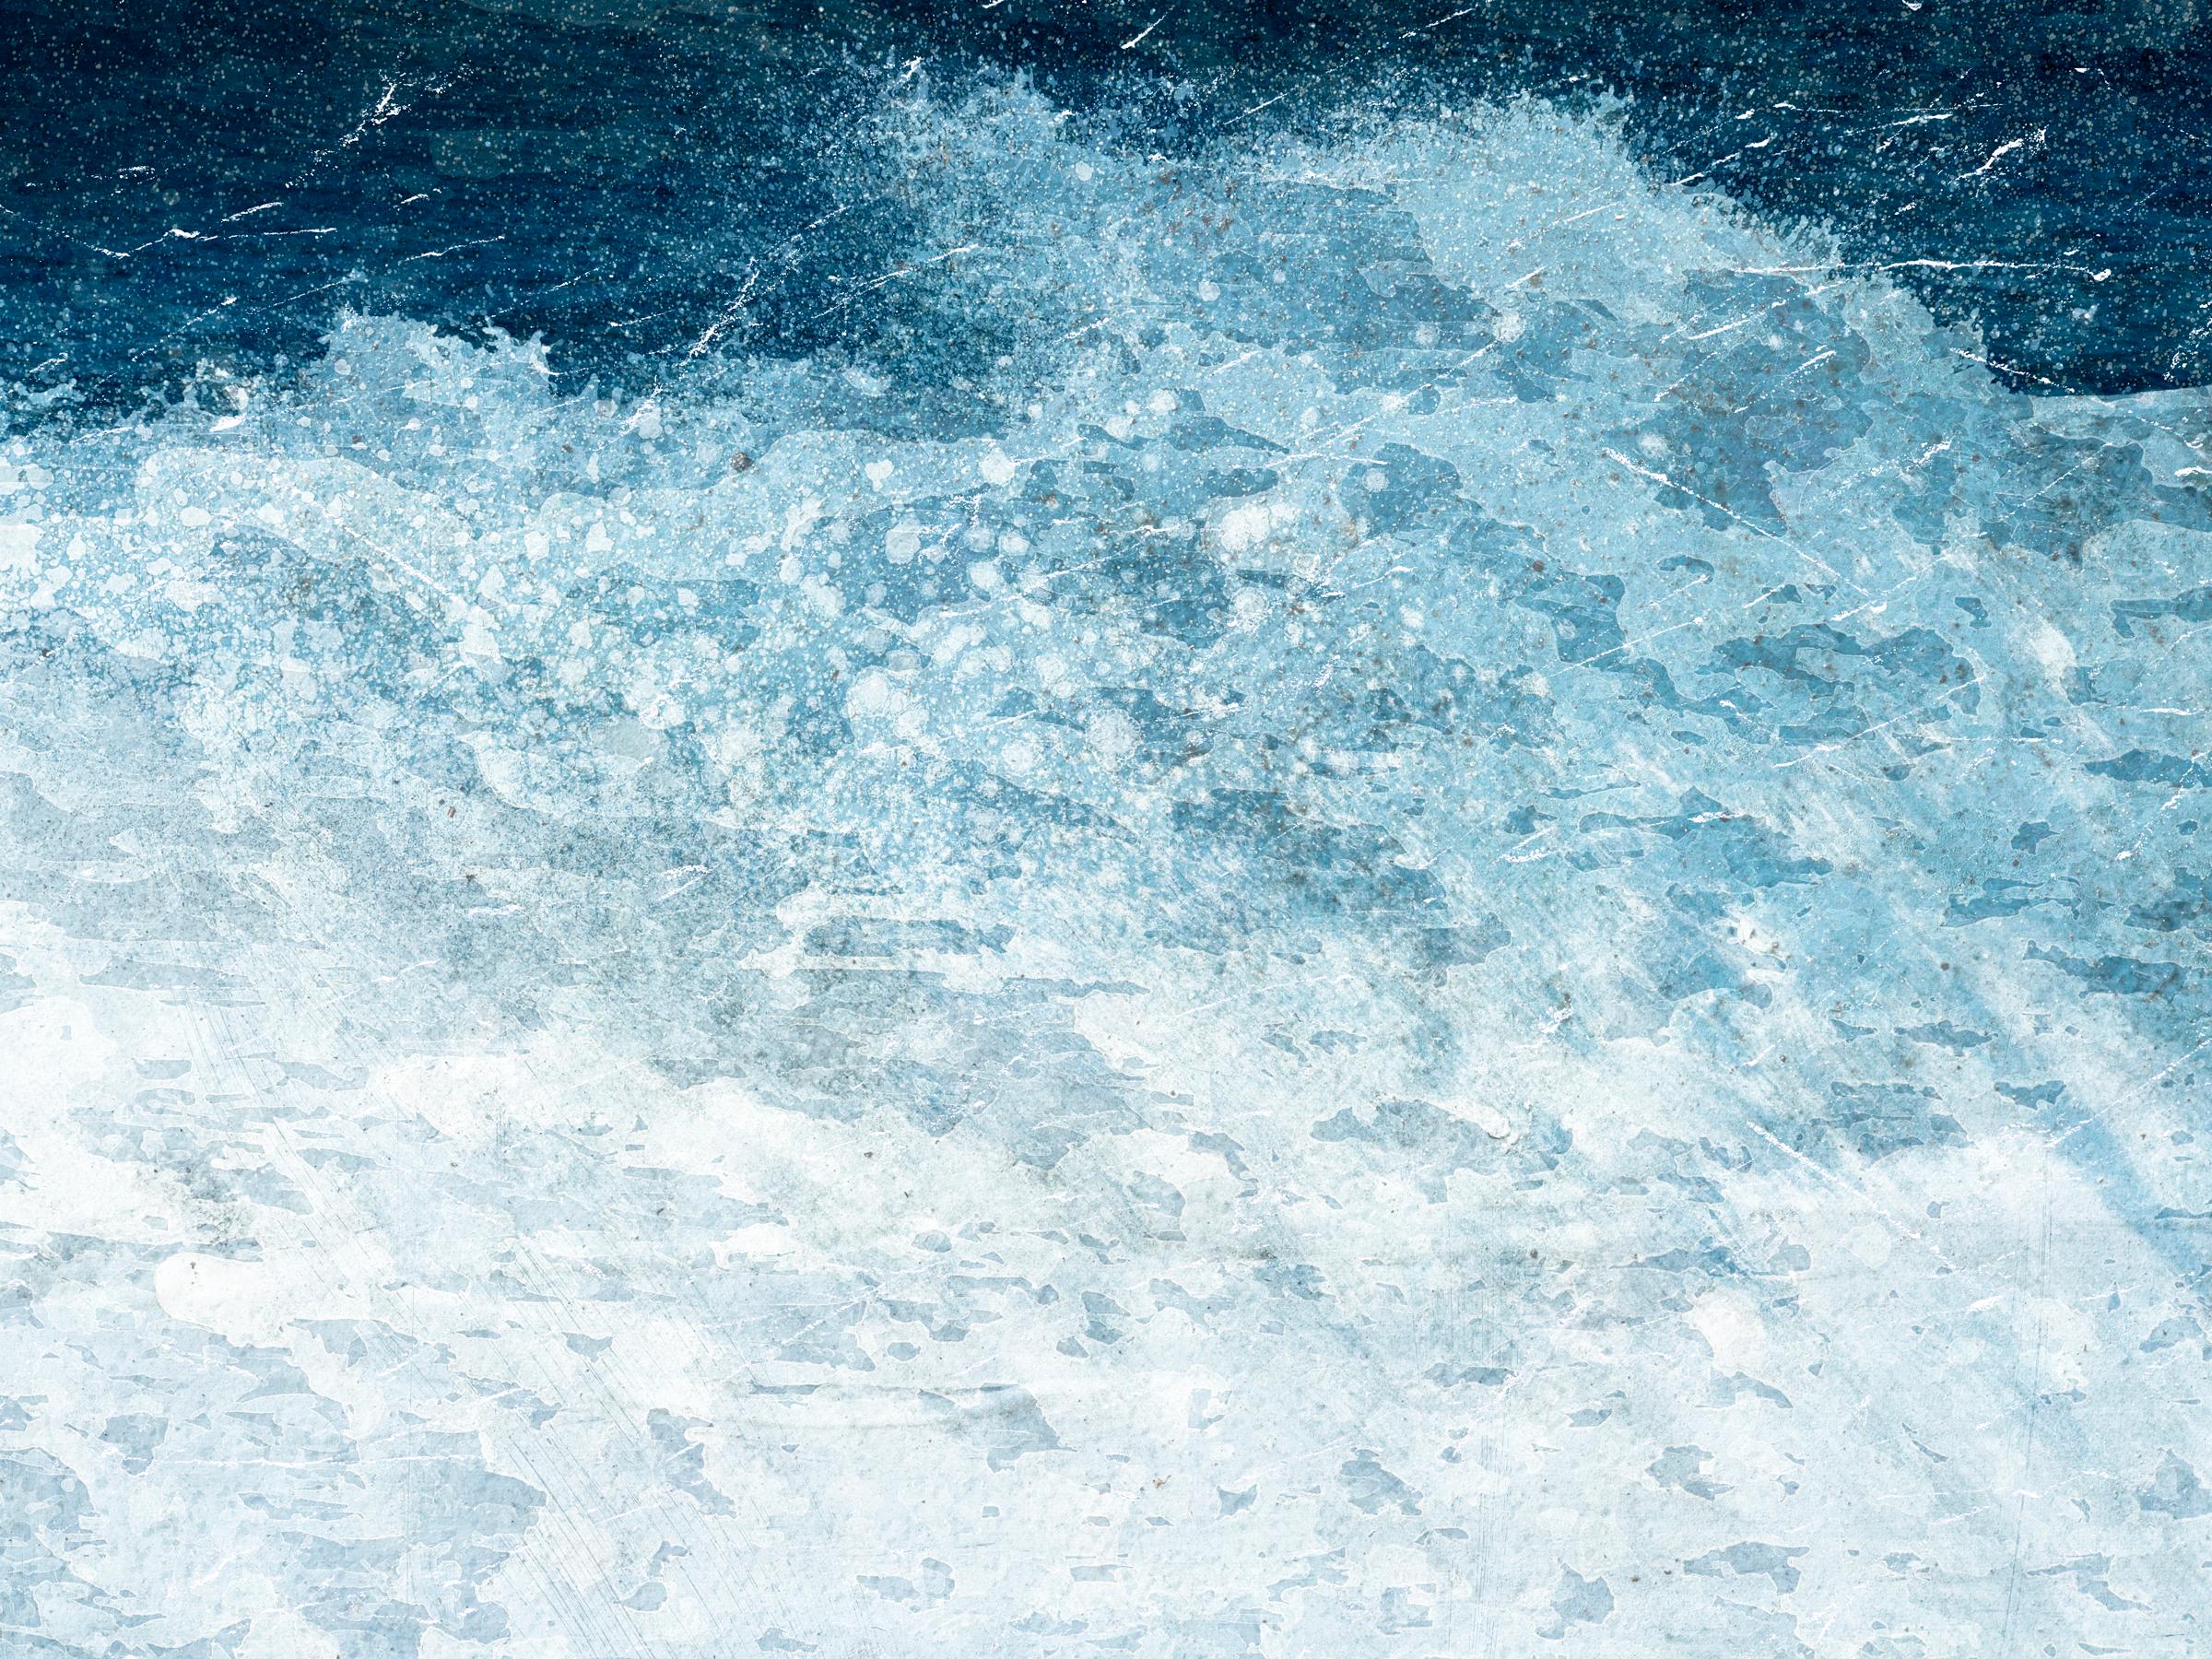 Jennifer McKinnon Abstract Photograph - Uncontained Consumption: Sea Spray - composite photo, beachscape, landscape